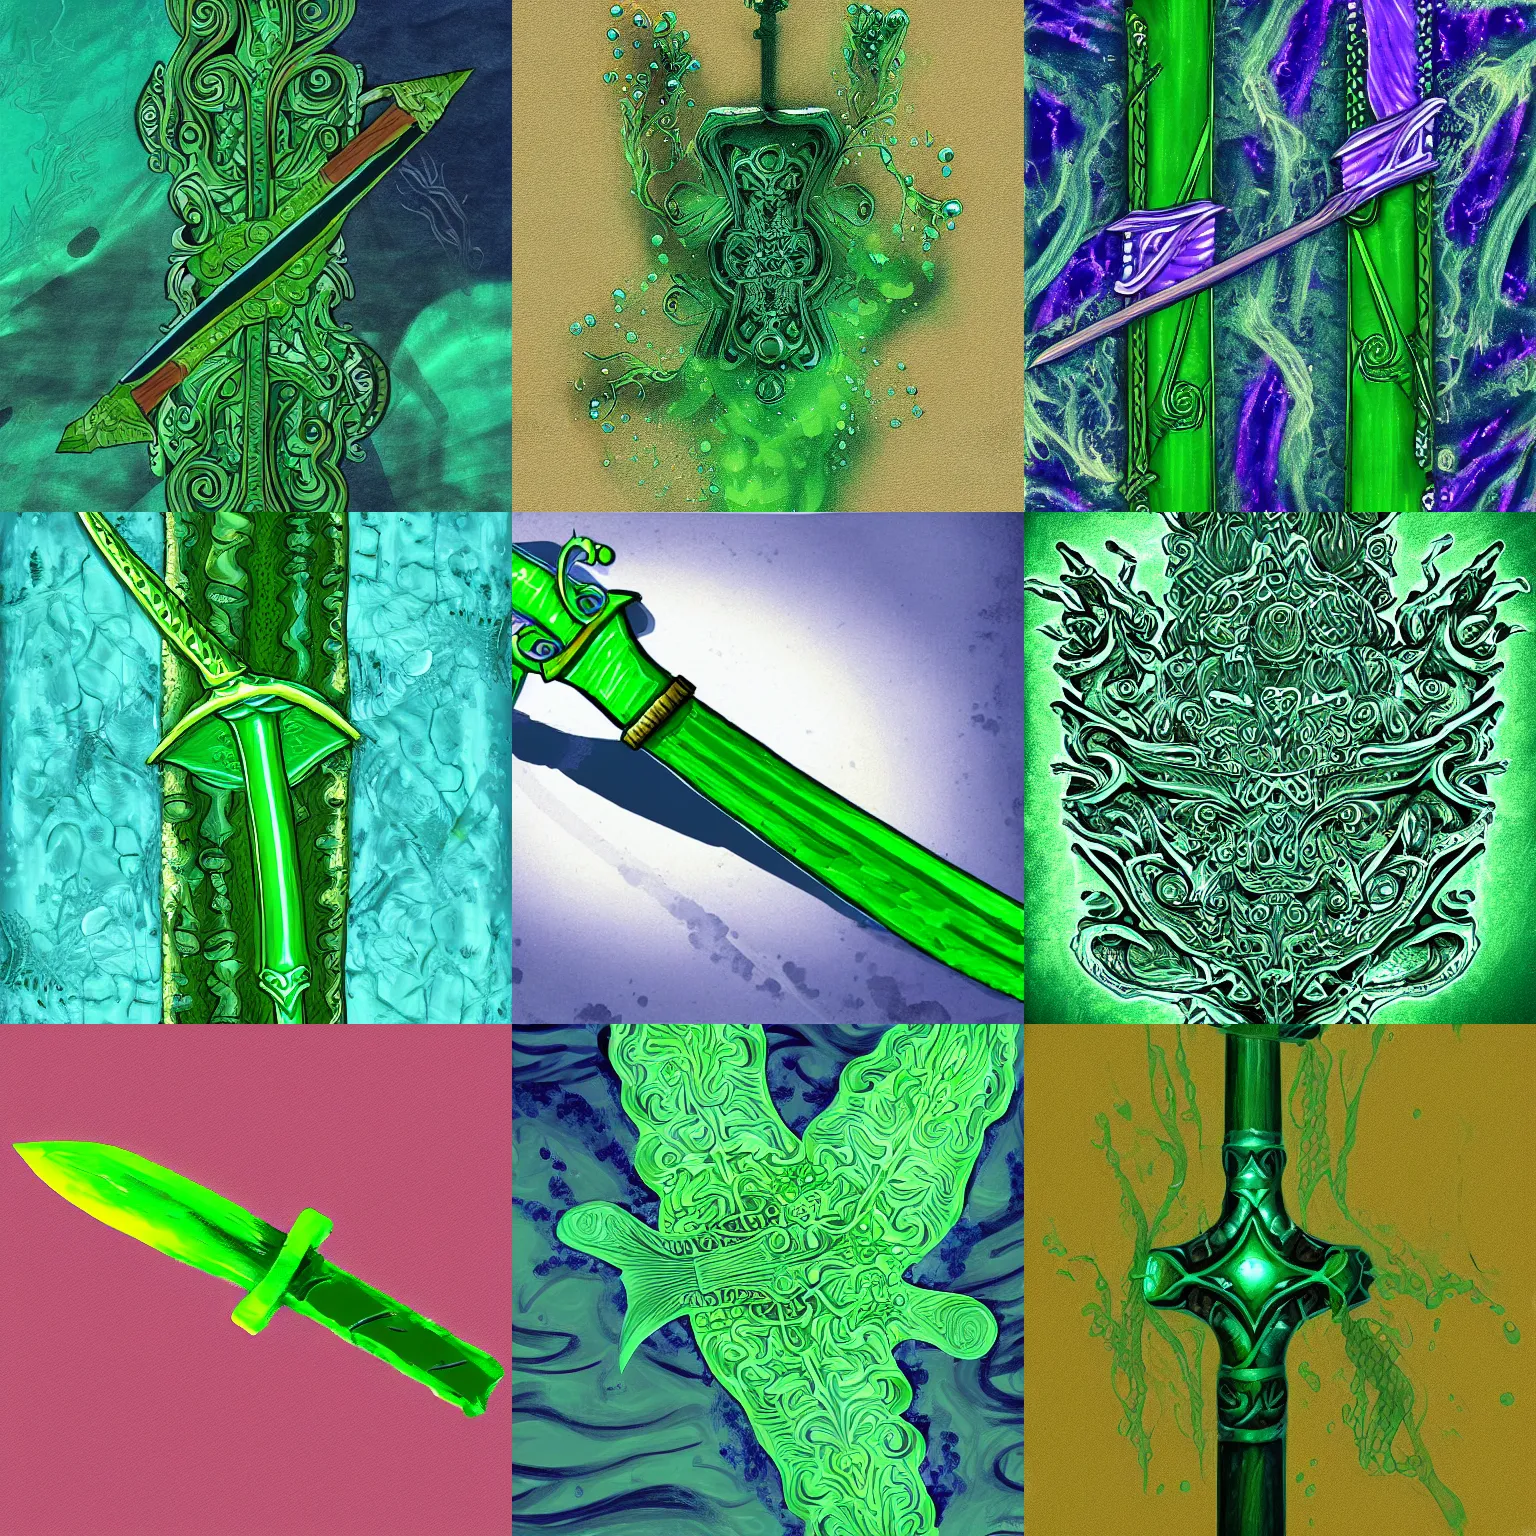 Prompt: an intricate green sword underwater, digital painting